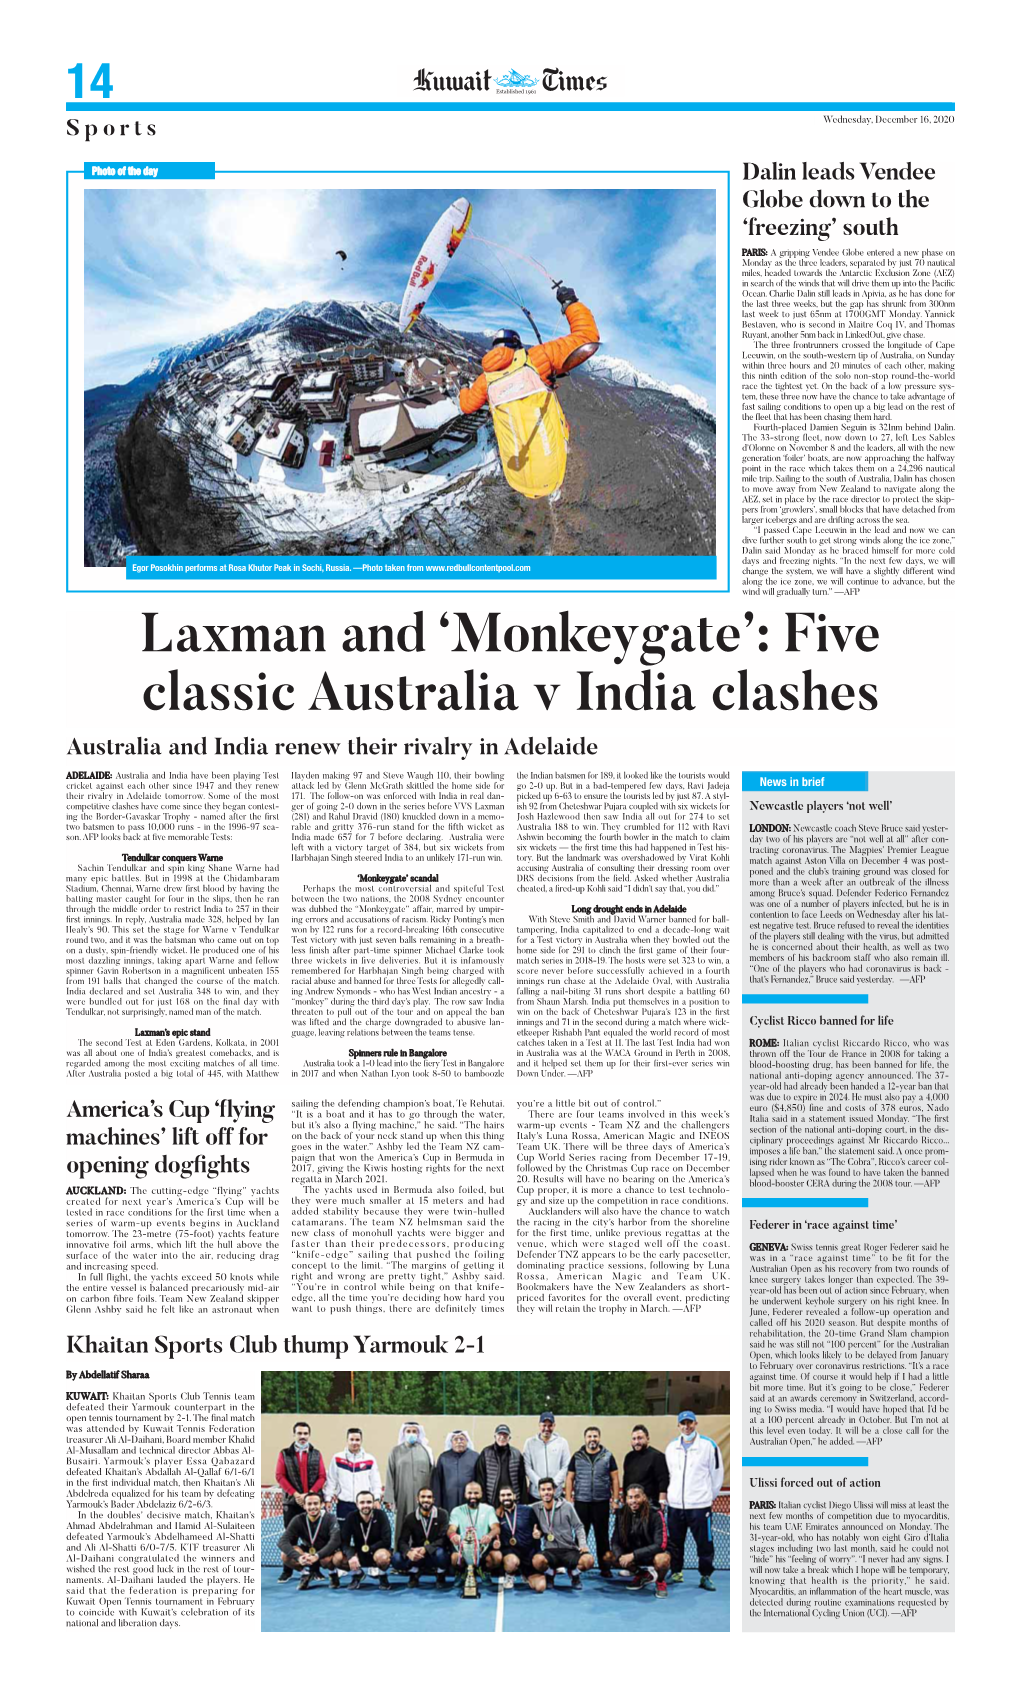 Laxman and 'Monkeygate': Five Classic Australia V India Clashes